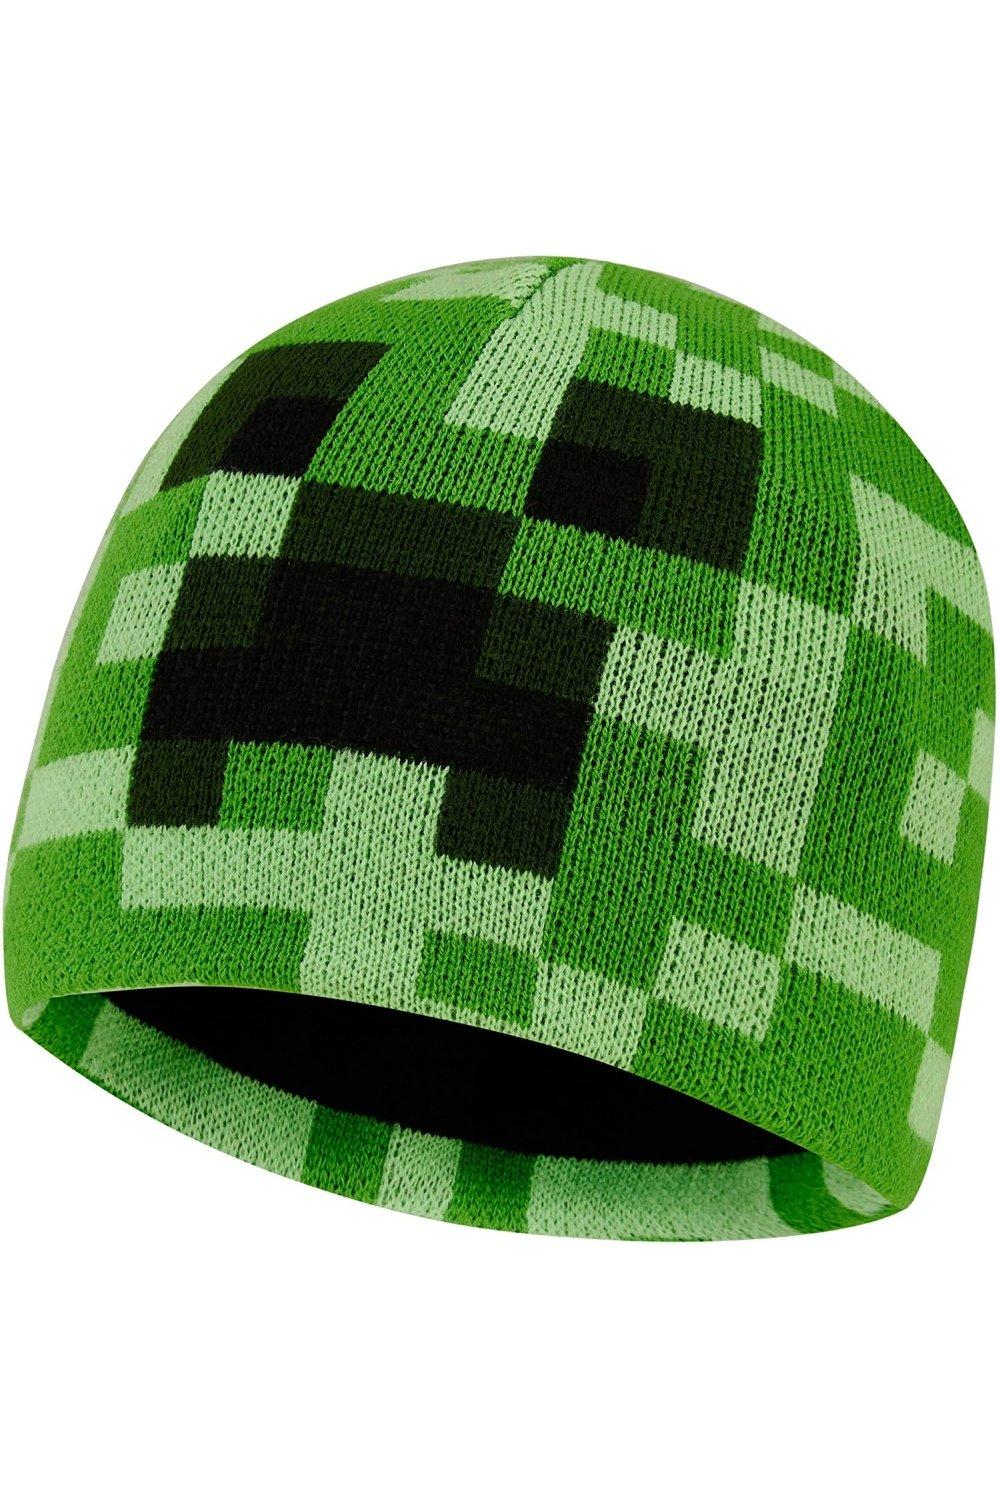 Шапка-бини Minecraft, зеленый футболка minecraft – creeper серая